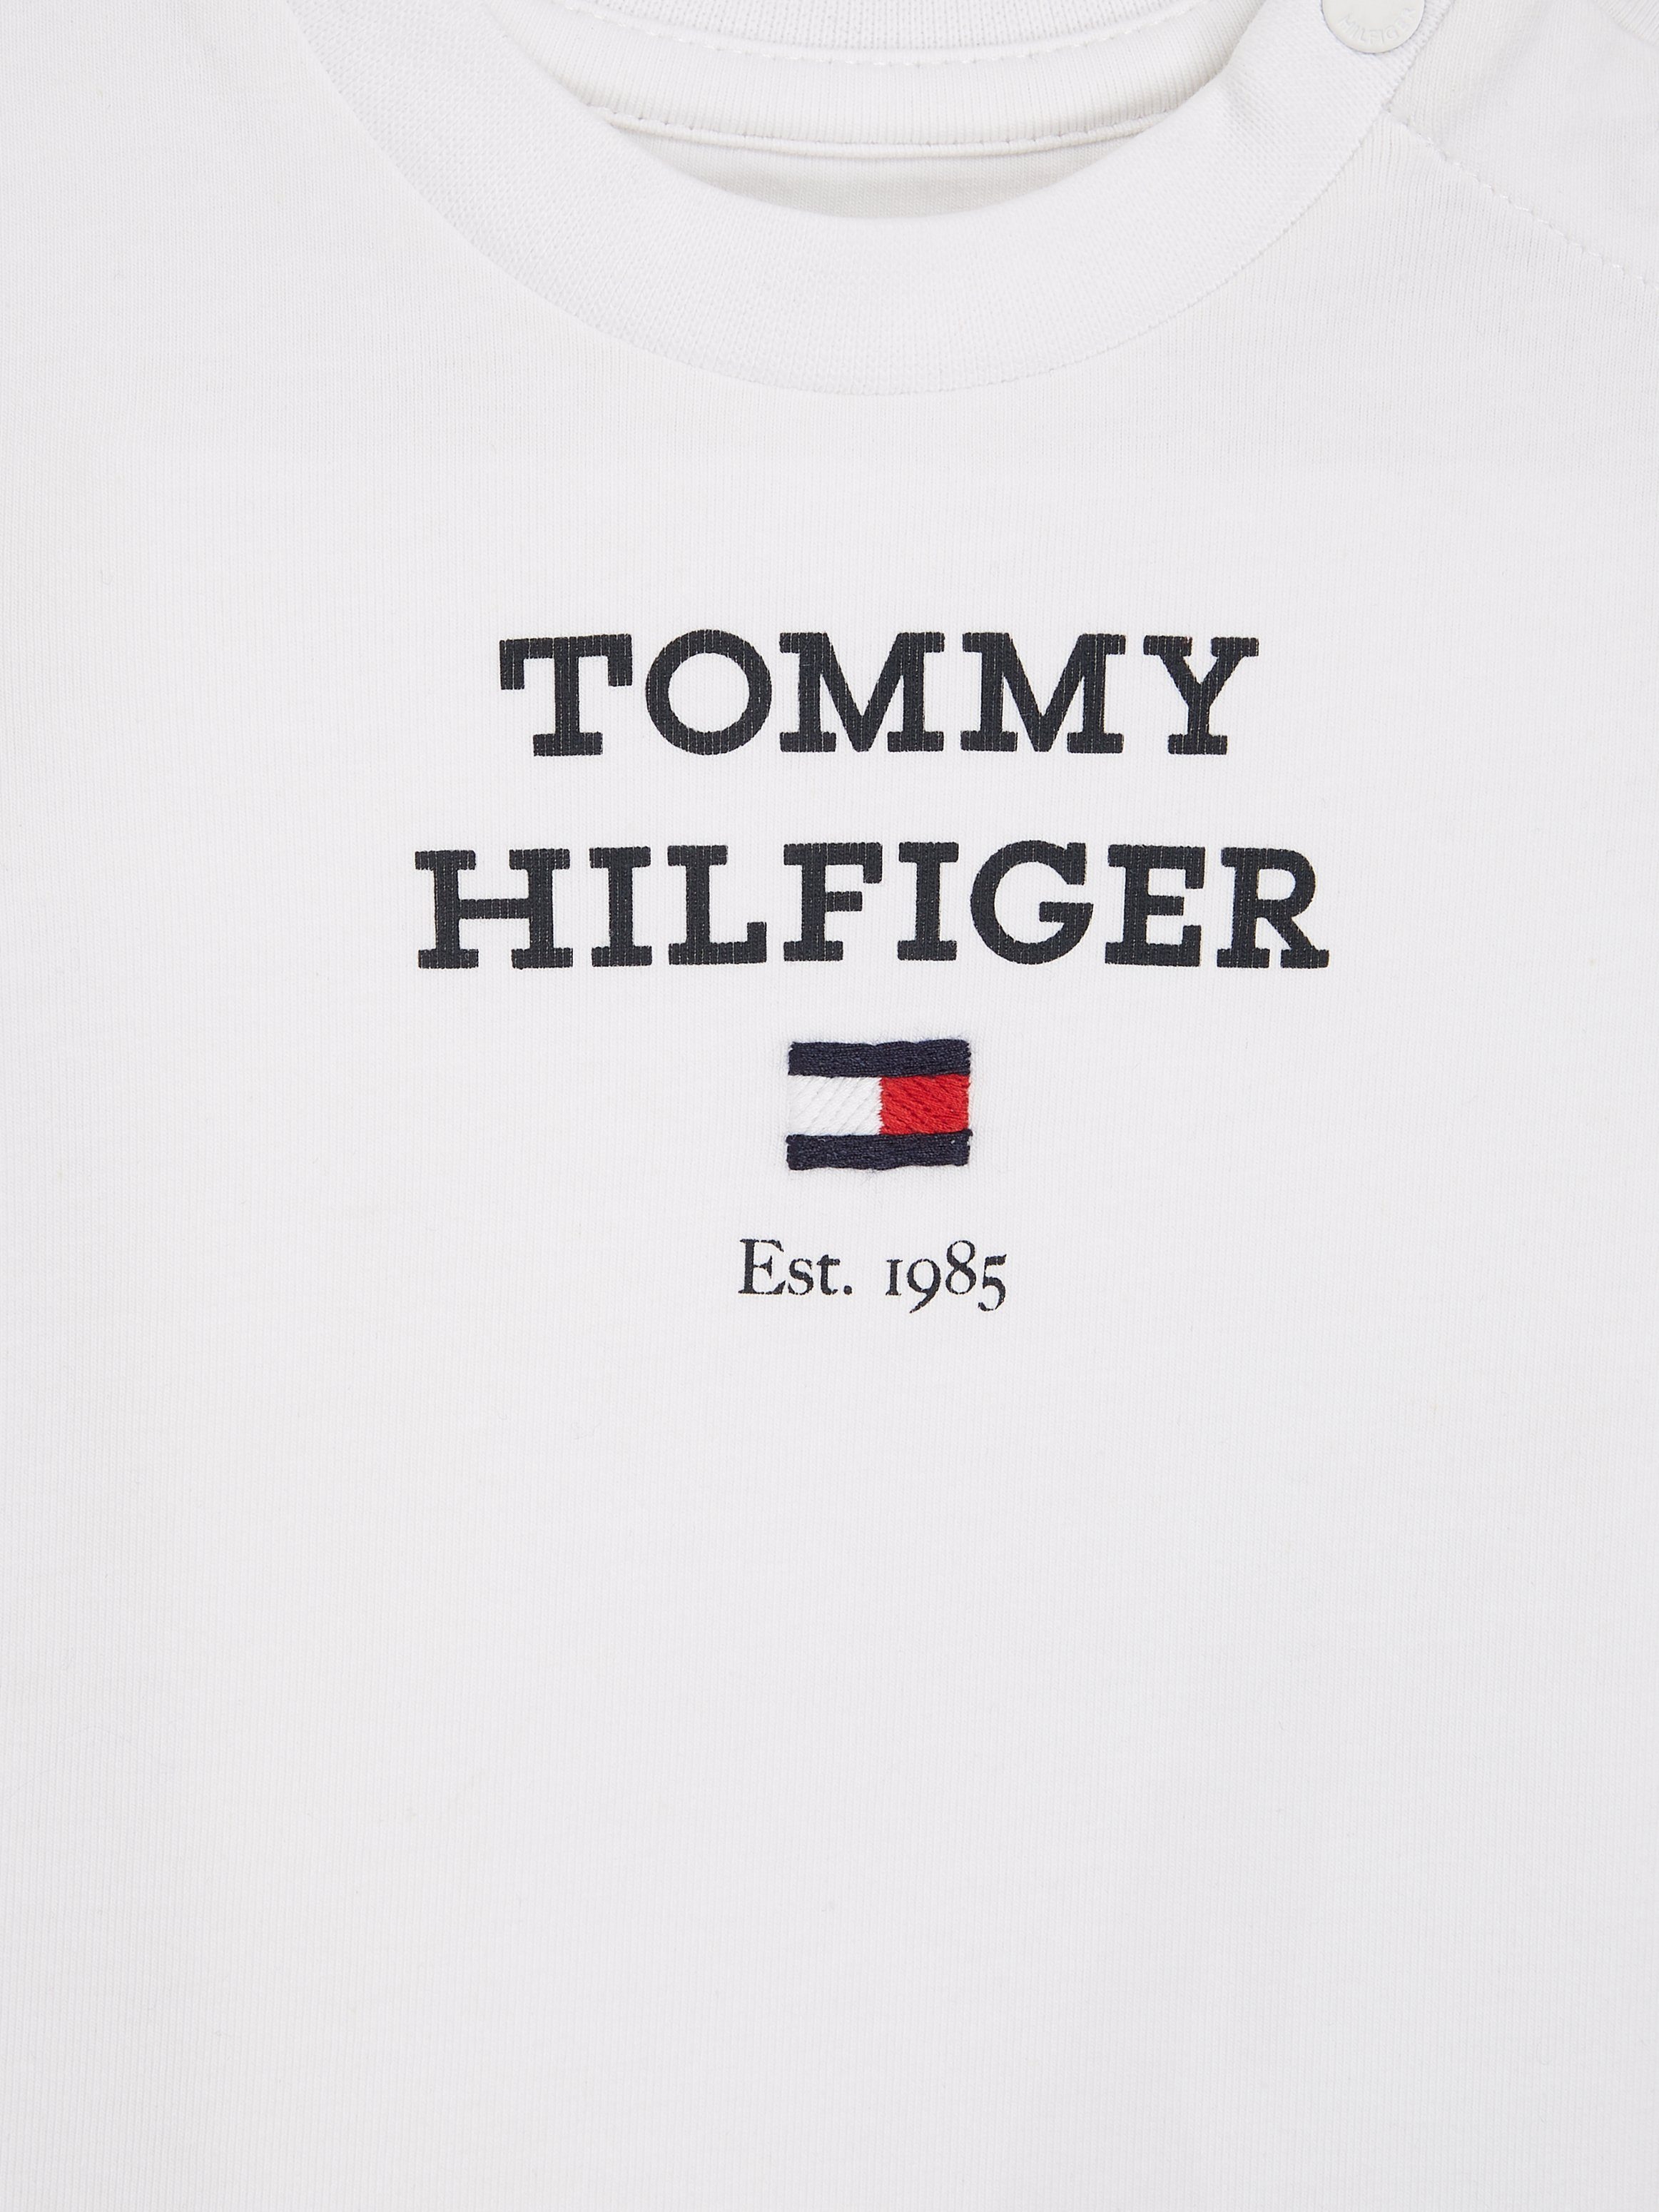 S/S T-Shirt BABY LOGO TH mit Tommy großem White Hilfiger Logo TEE